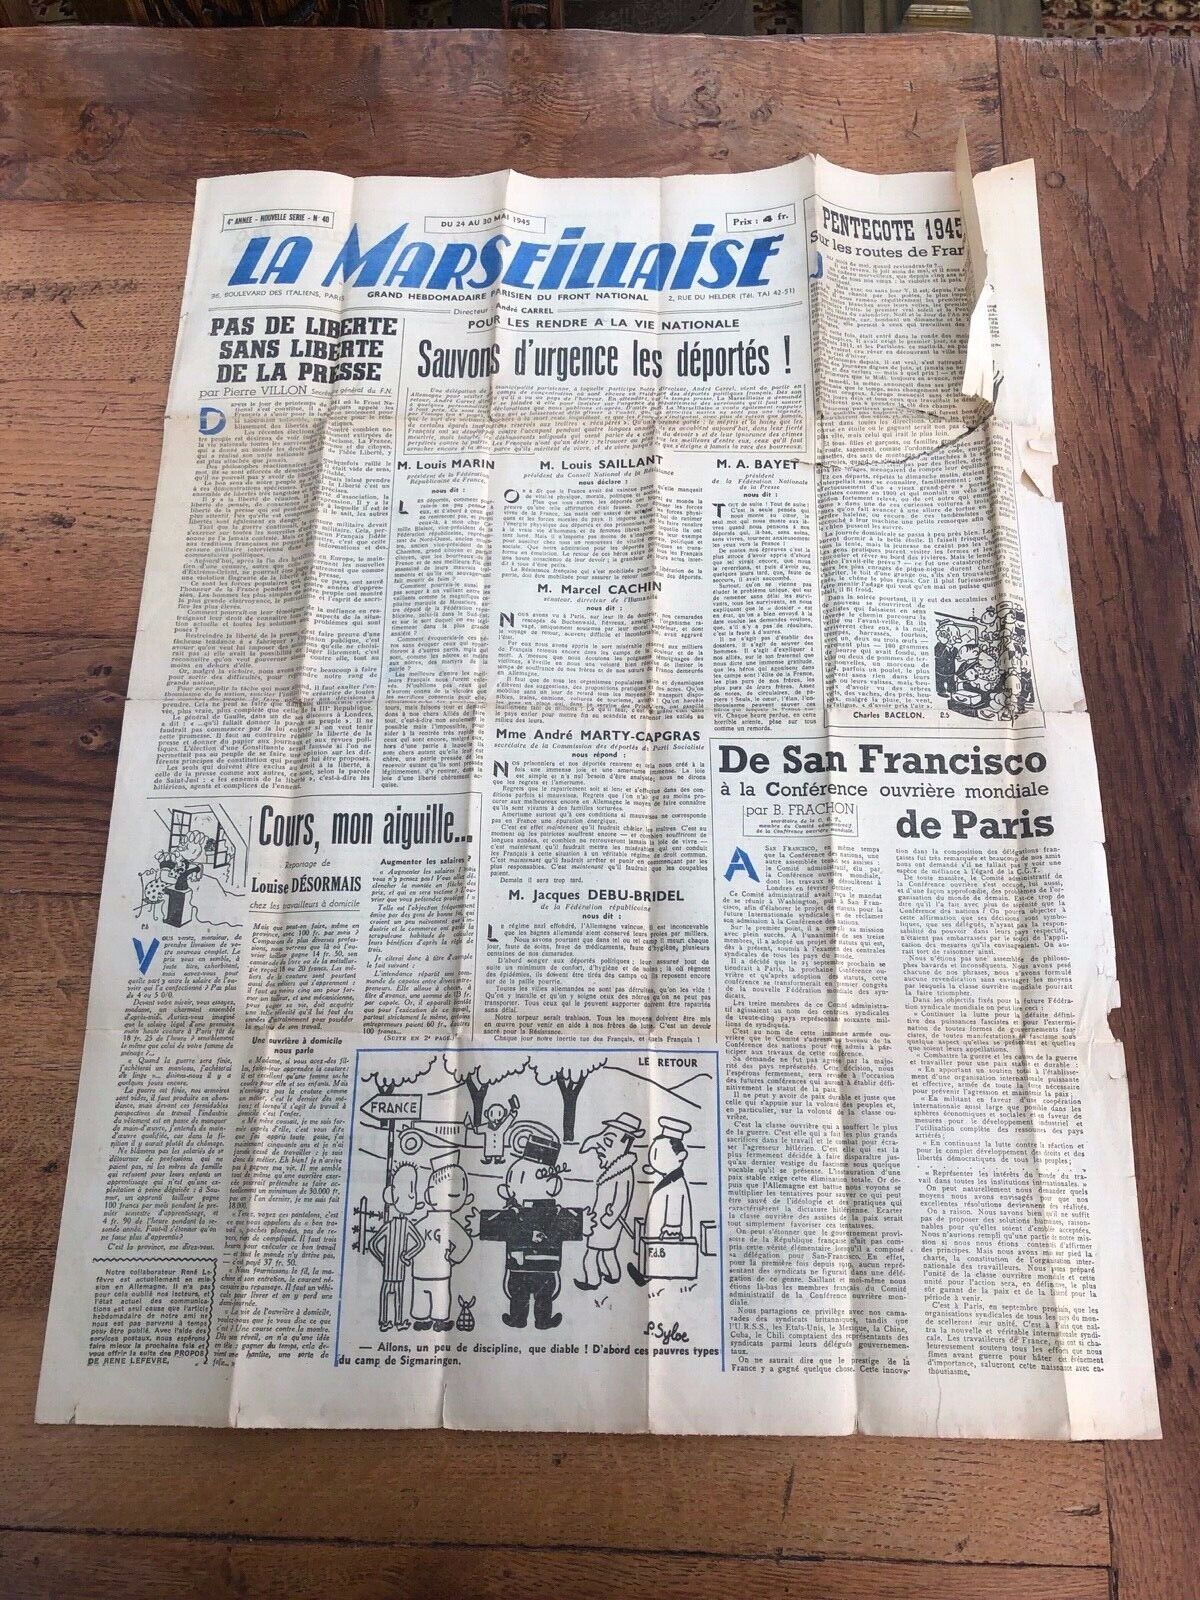 la marseillaise -1945 newspaper